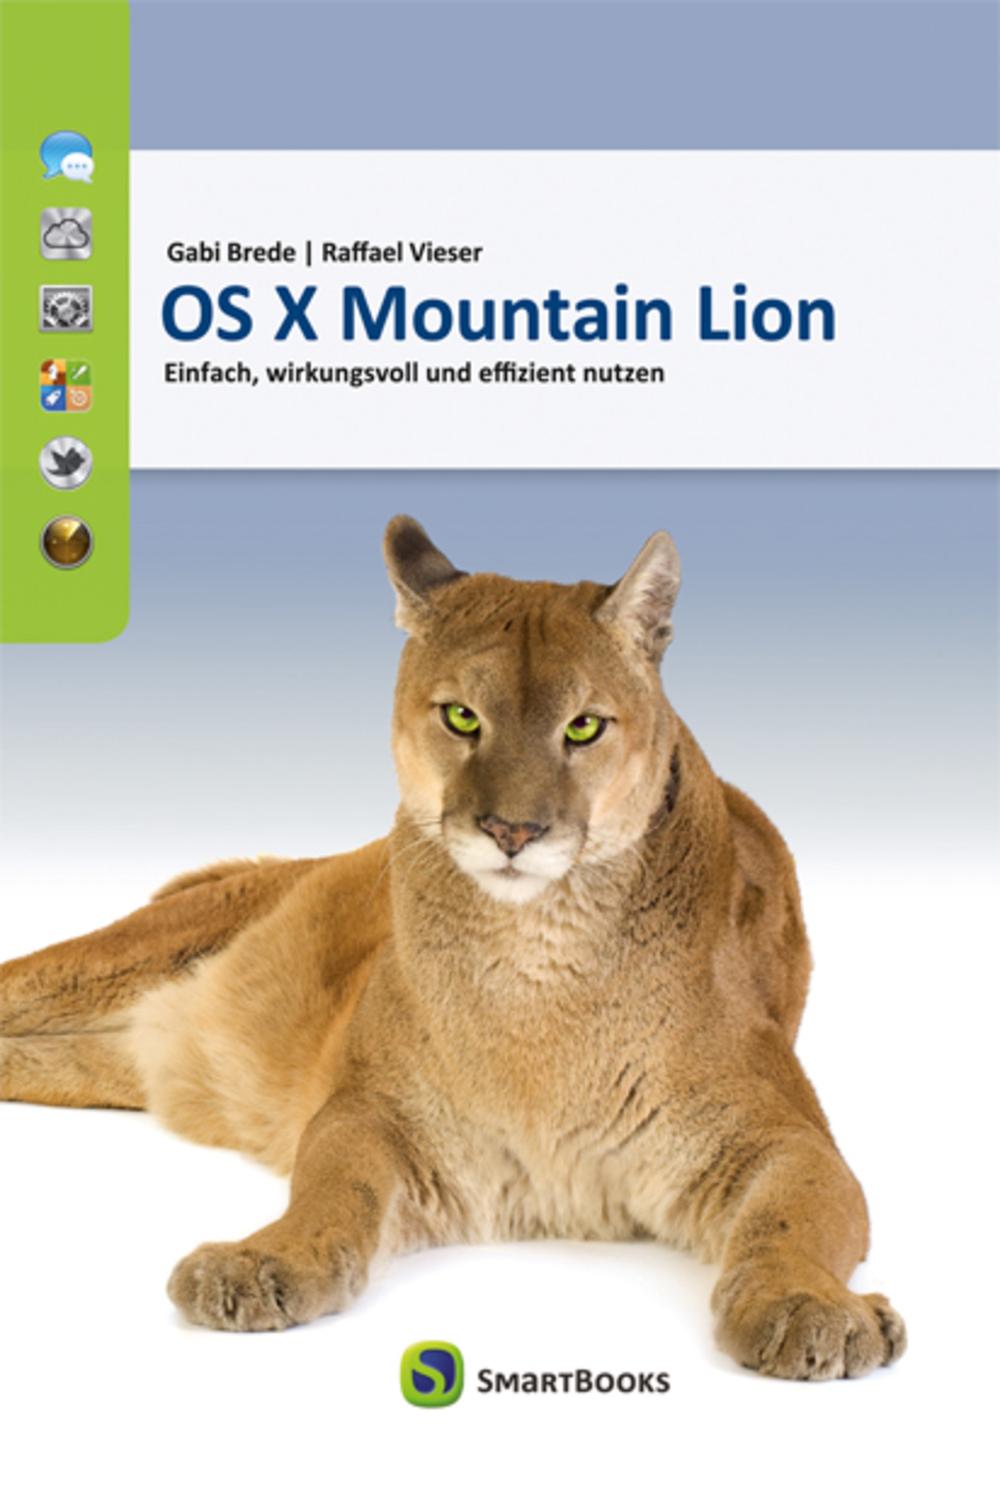 OS X Mountain Lion - Gabi Brede, Raffael Vieser